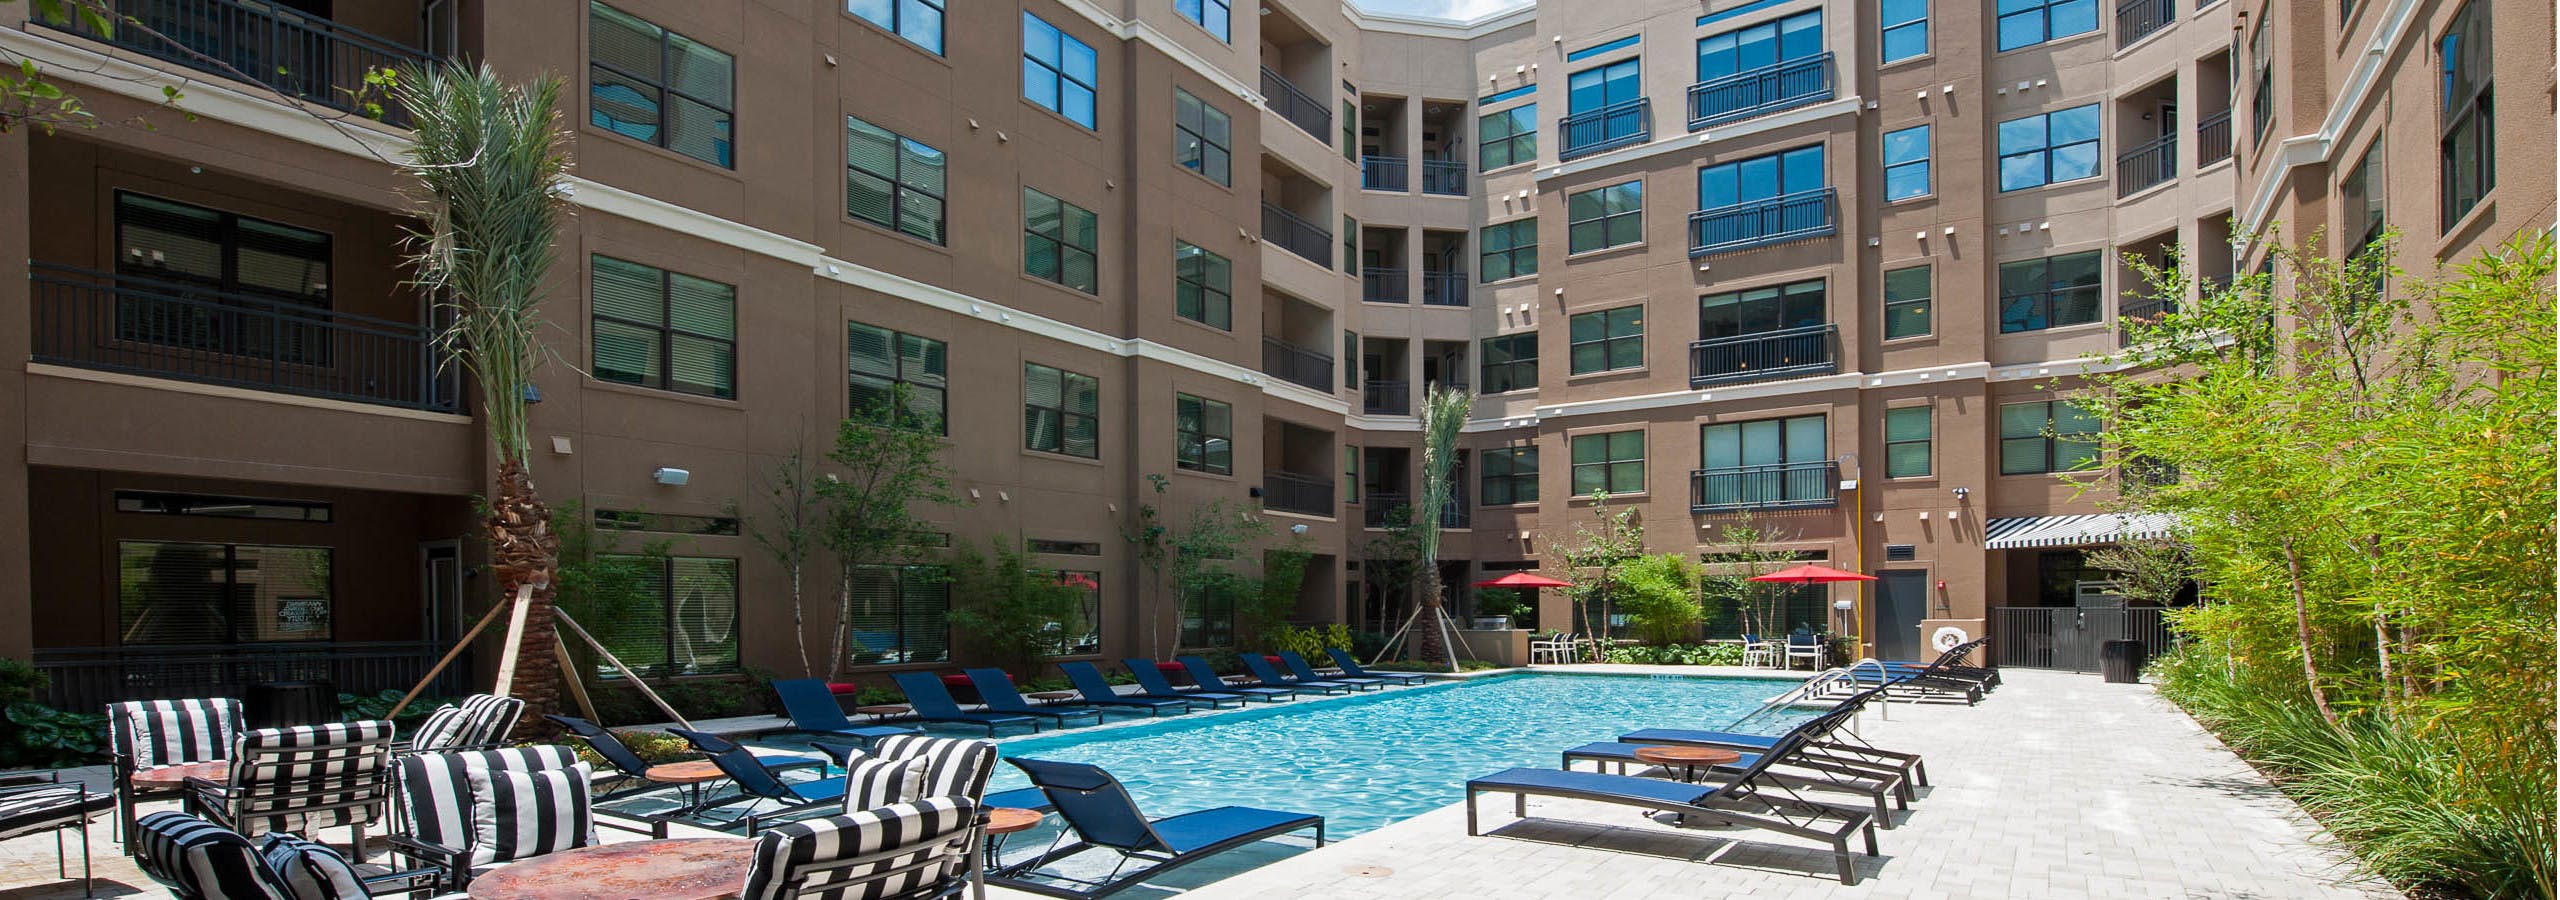 Luxury Houston Apartments For Rent Amli Residential